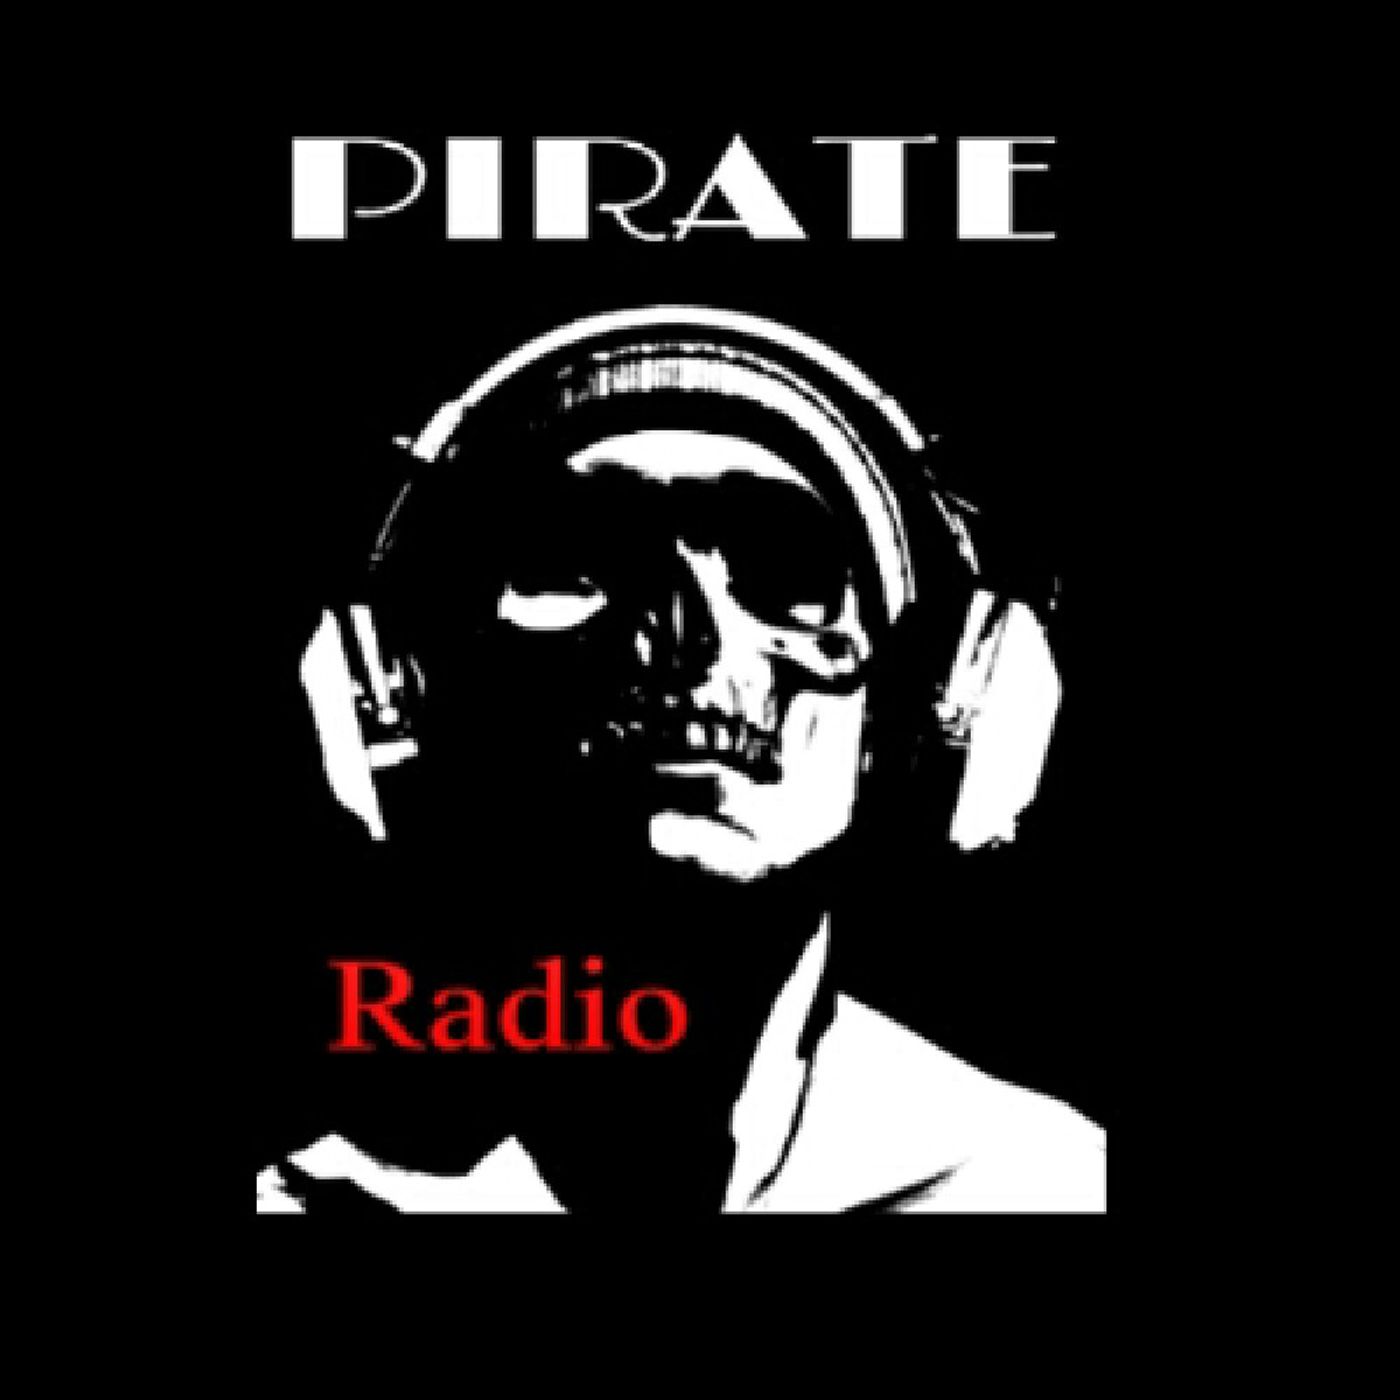 The Pirate Radio